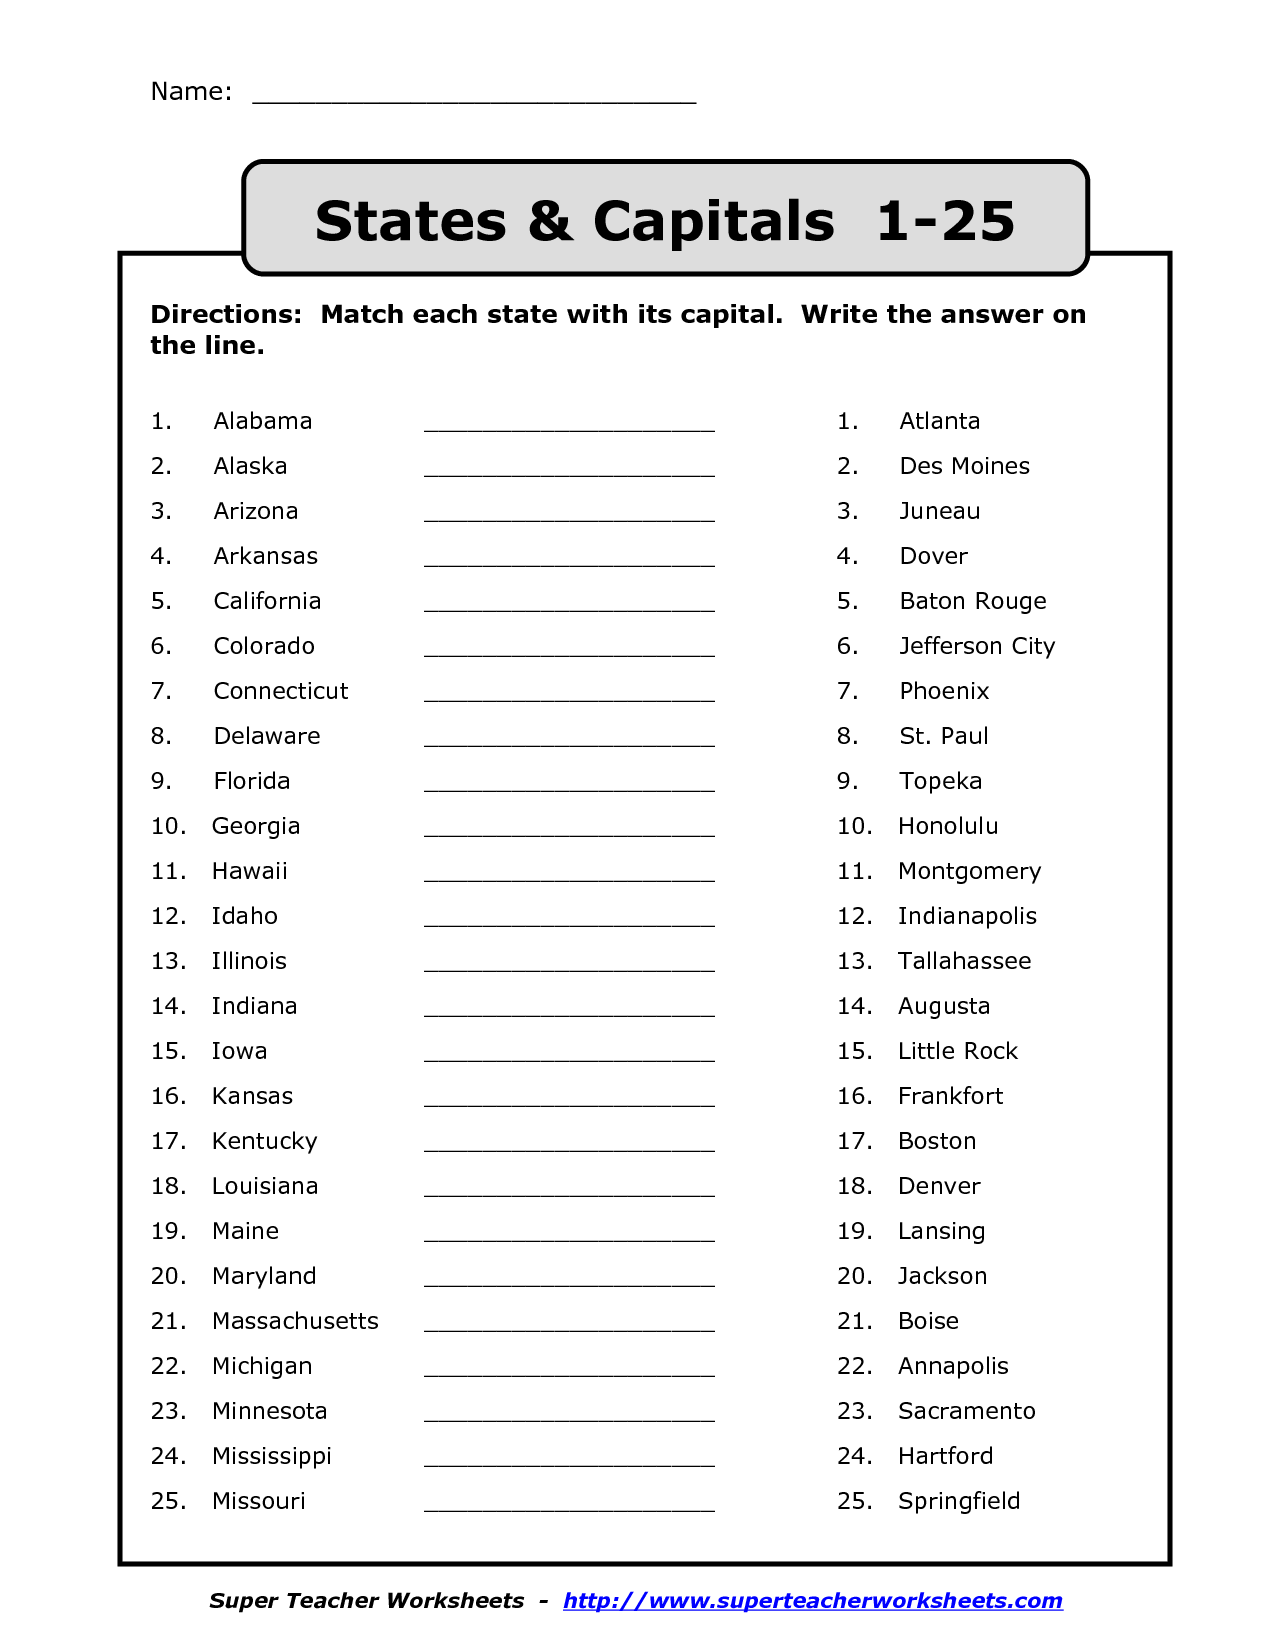 6-best-images-of-free-printable-state-worksheets-50-states-worksheets